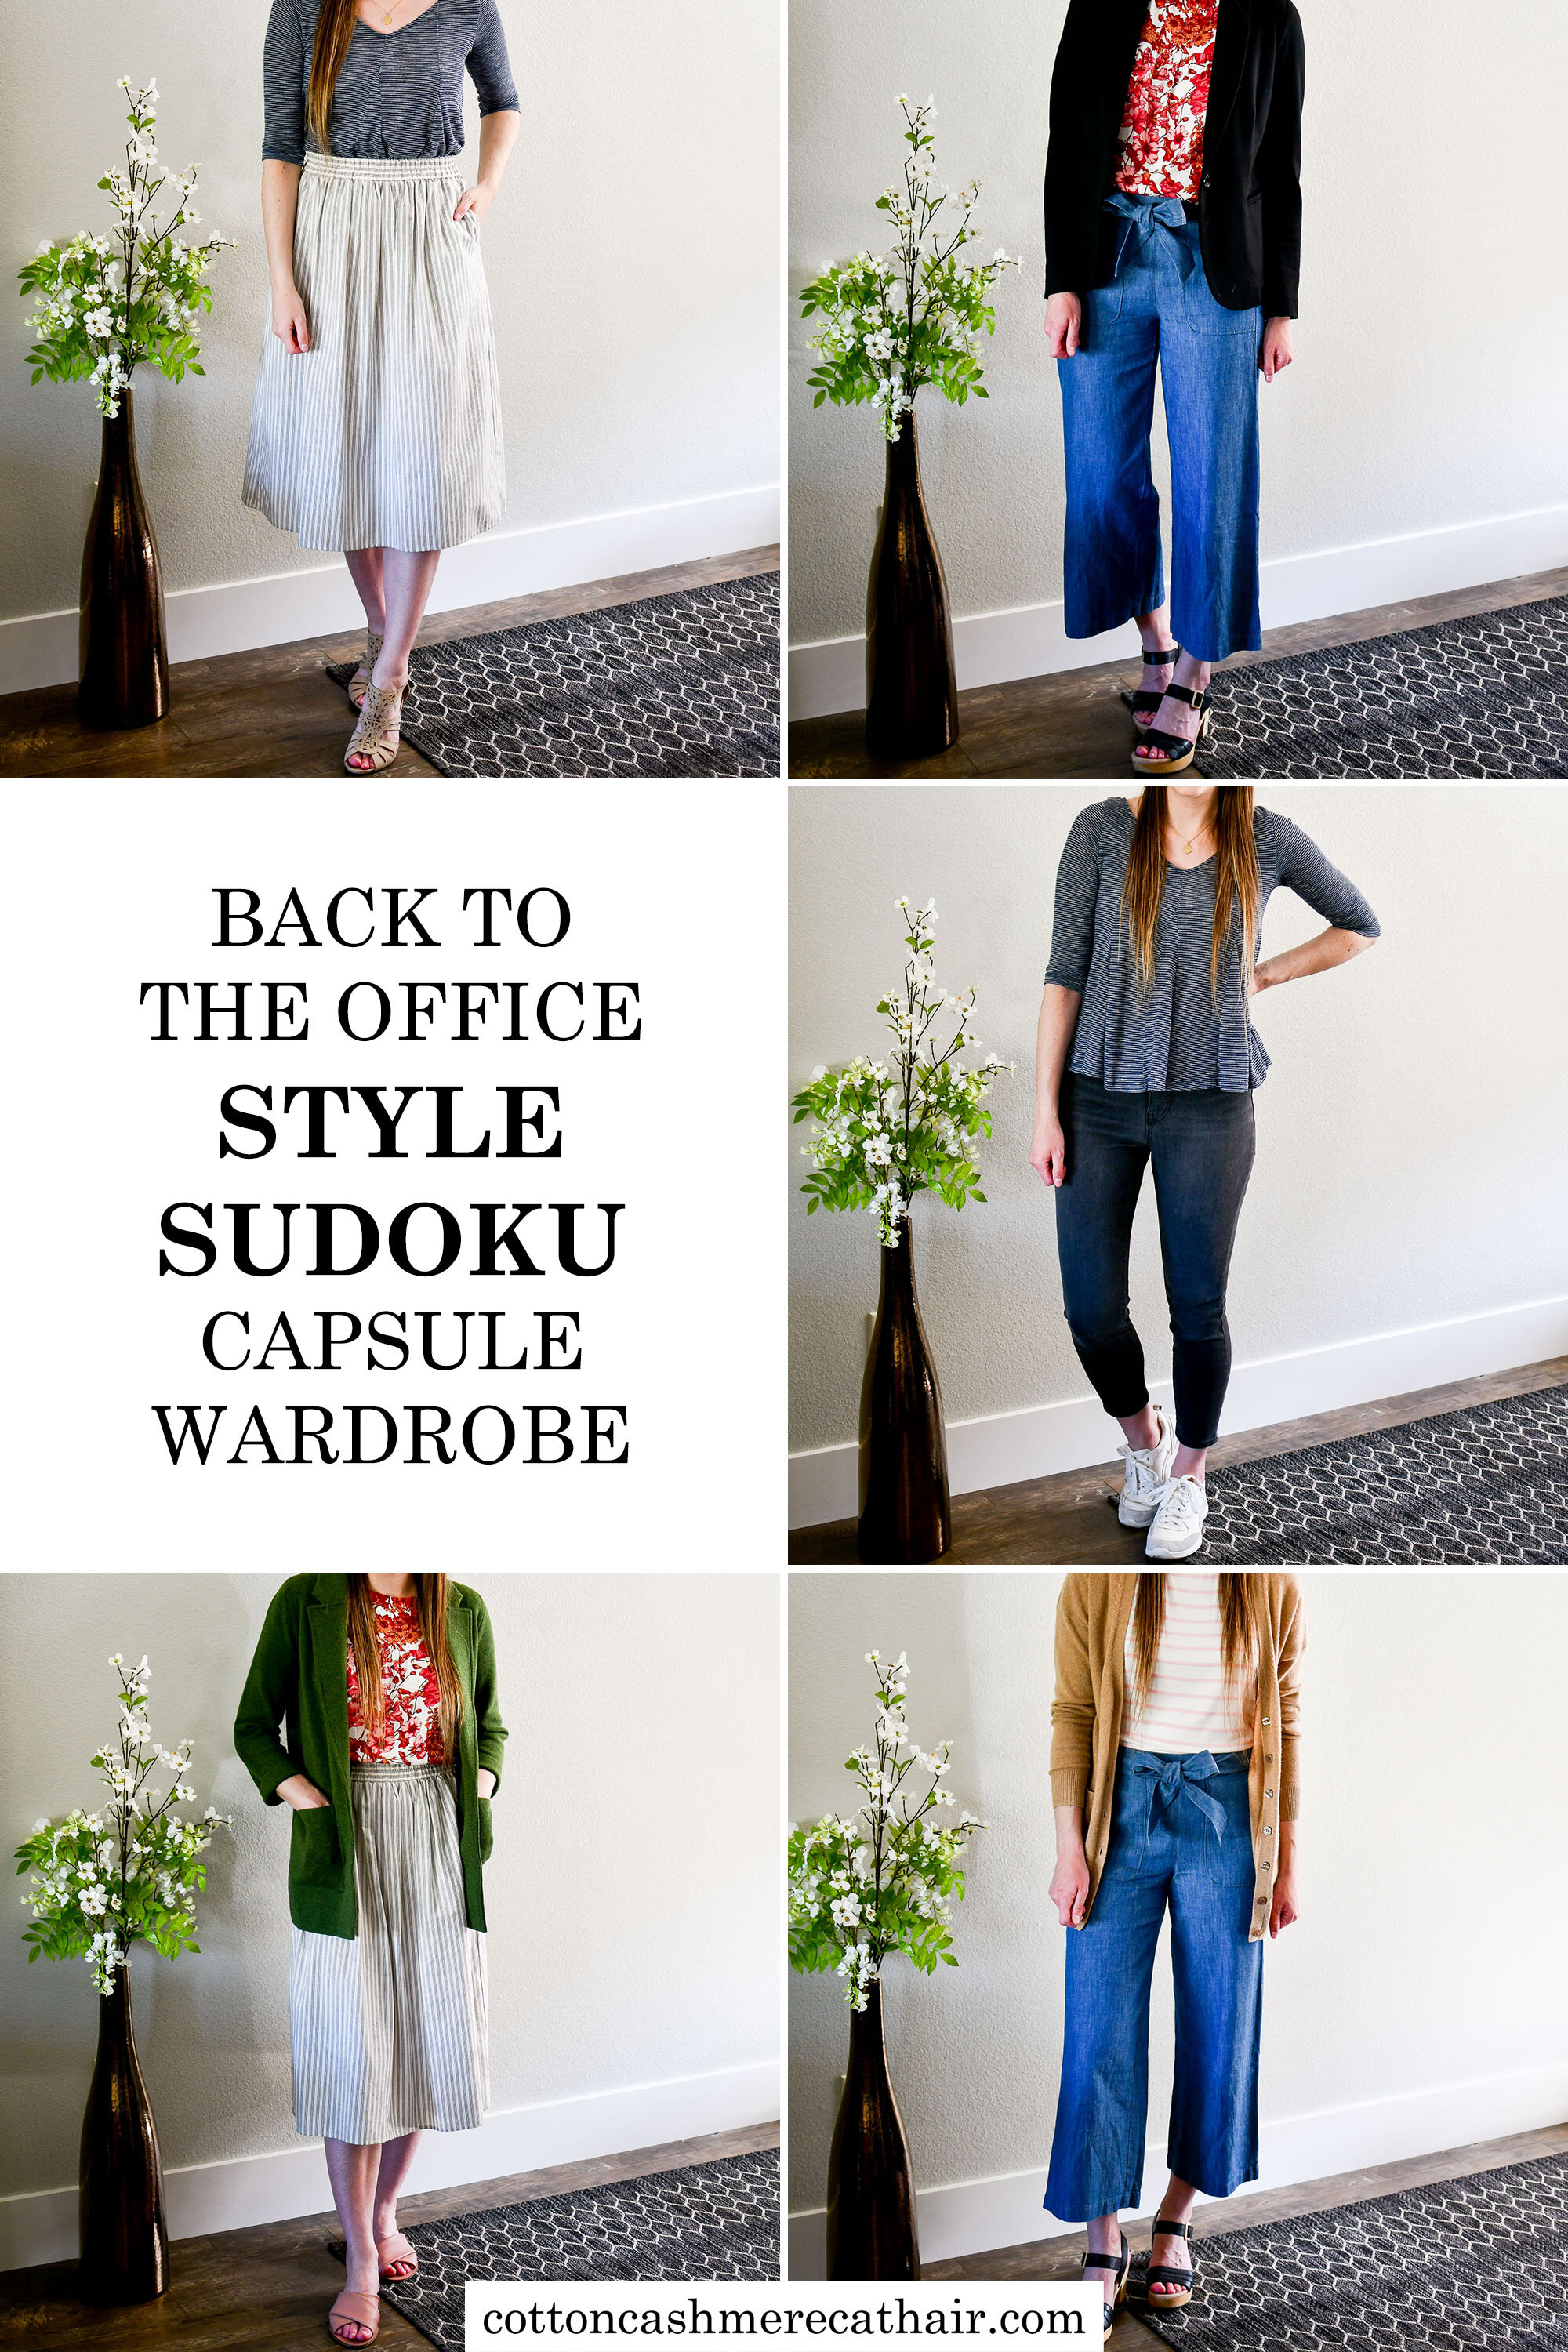 Style Sudoku Capsule Wardrobe: Back to the Office